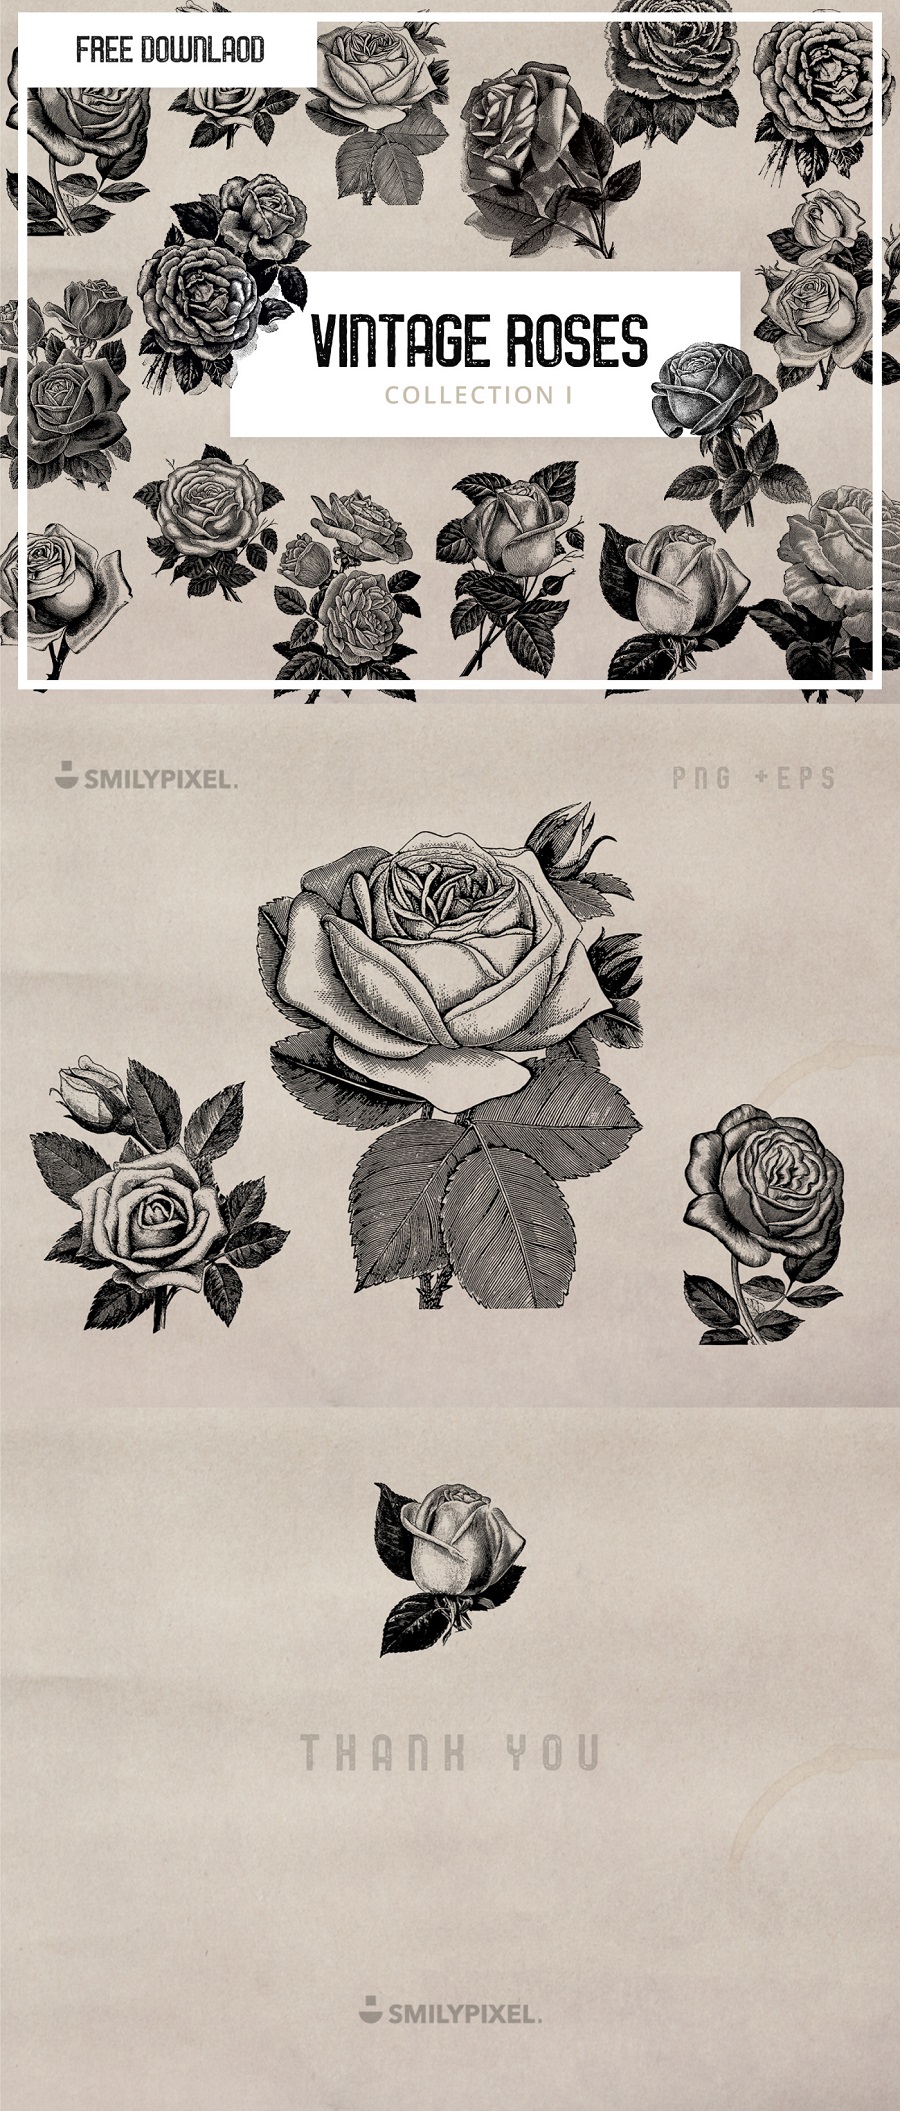 Free Vintage Roses Illustration